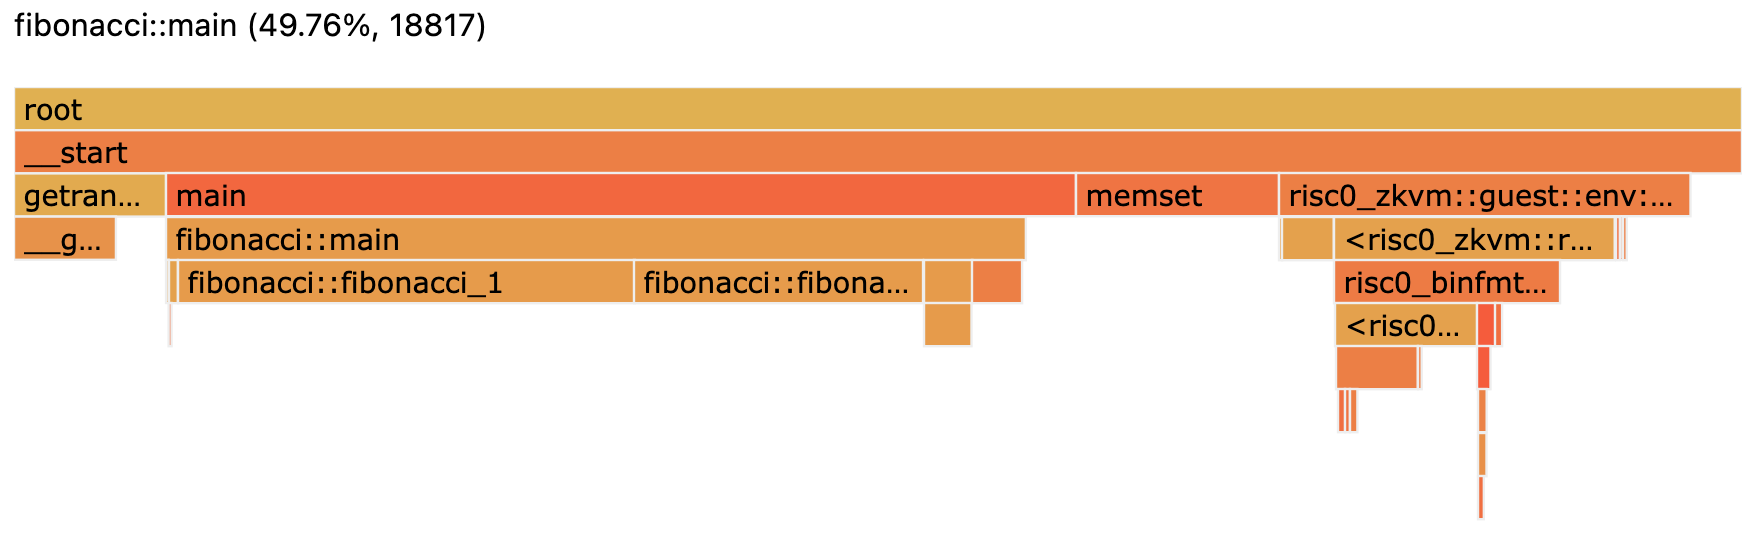 flamegraph of Fibonacci profiling example